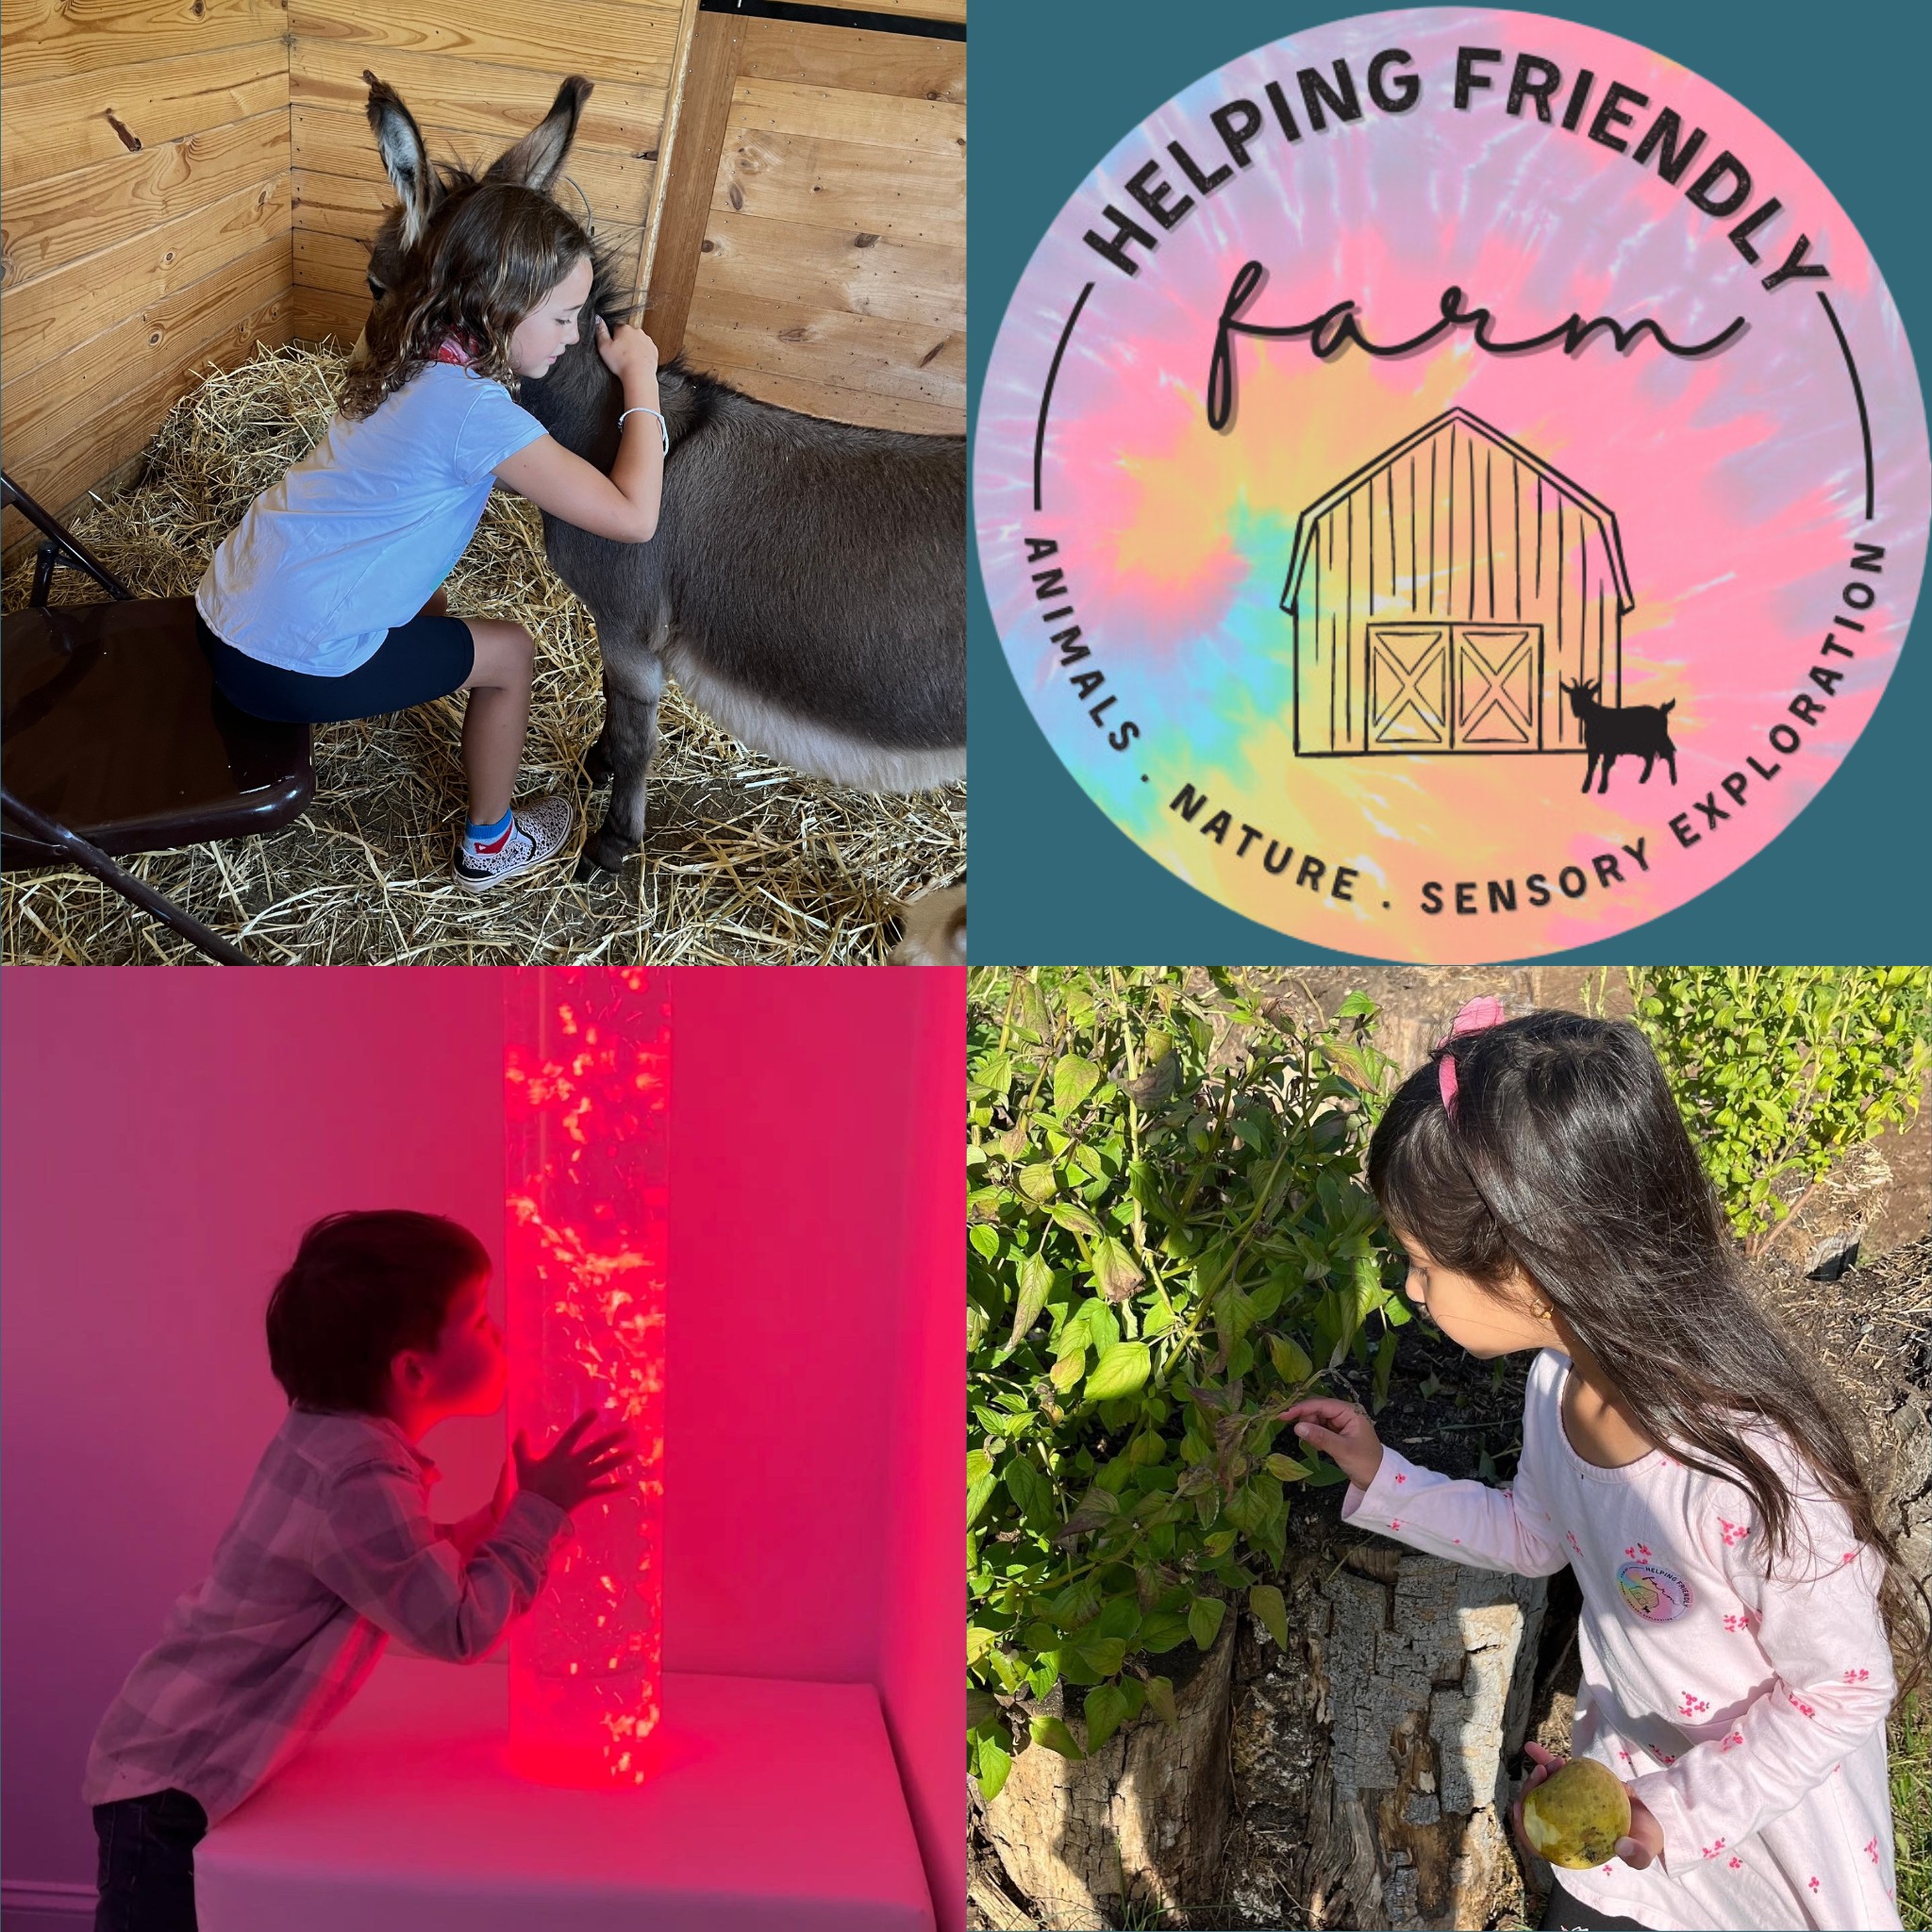 Helping Friendly Farm Photo Collage